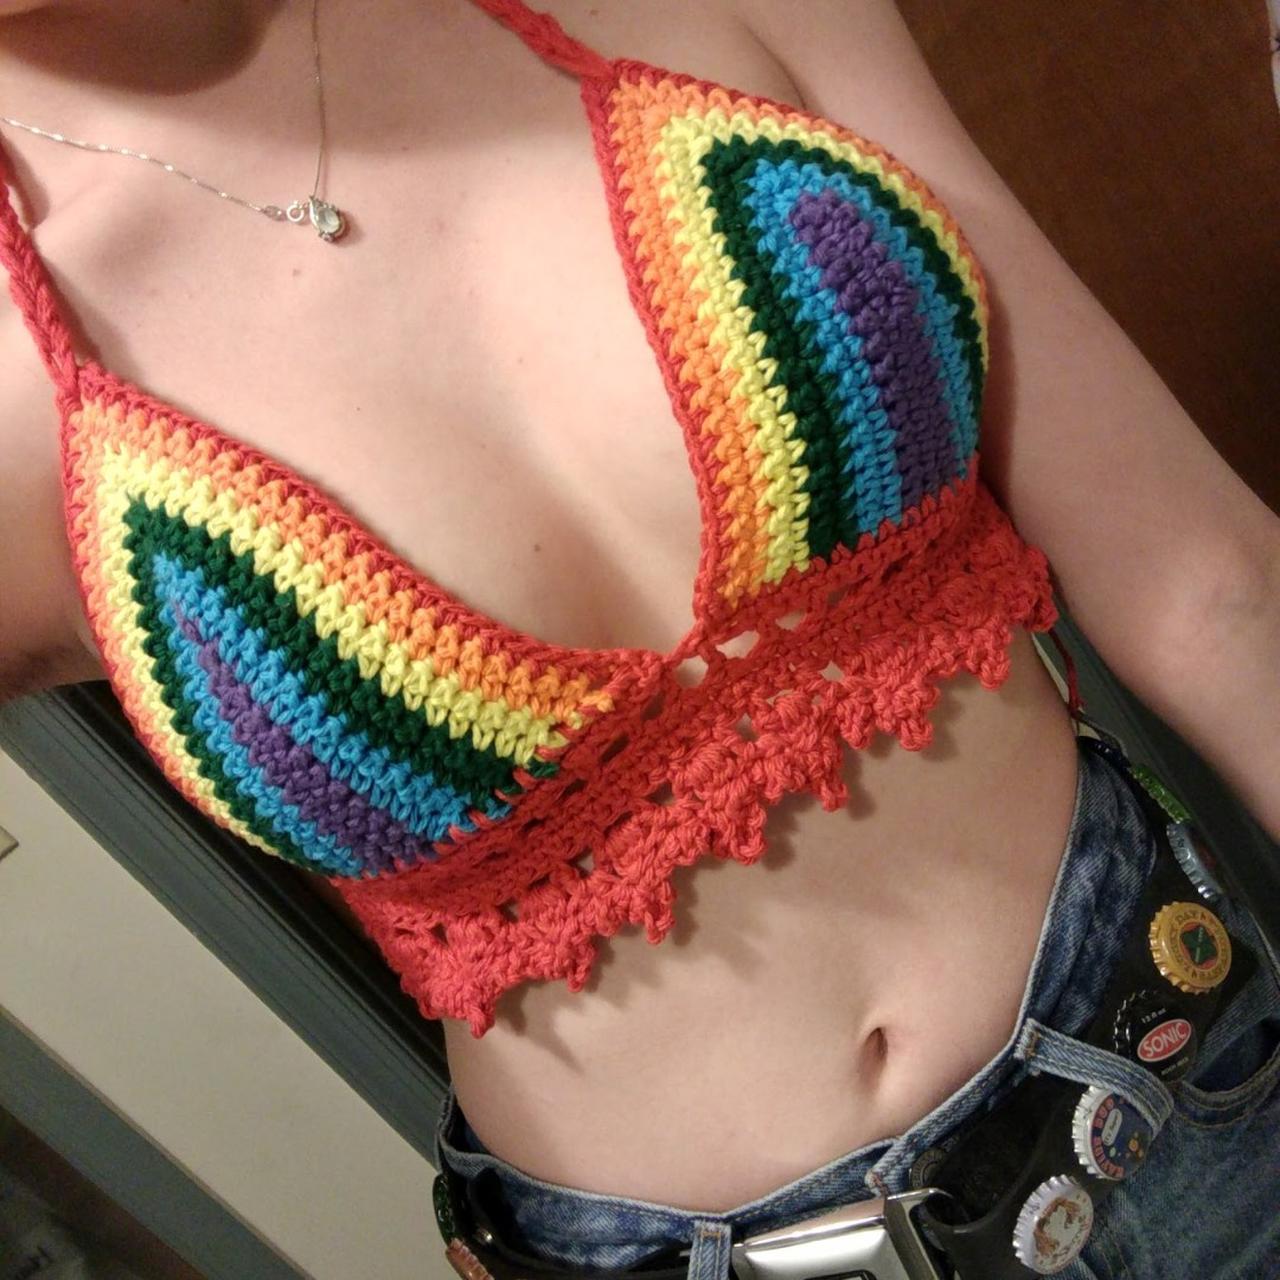 Colourful Festival rainbow sequin bra 🌈🌈🌈 Bought - Depop